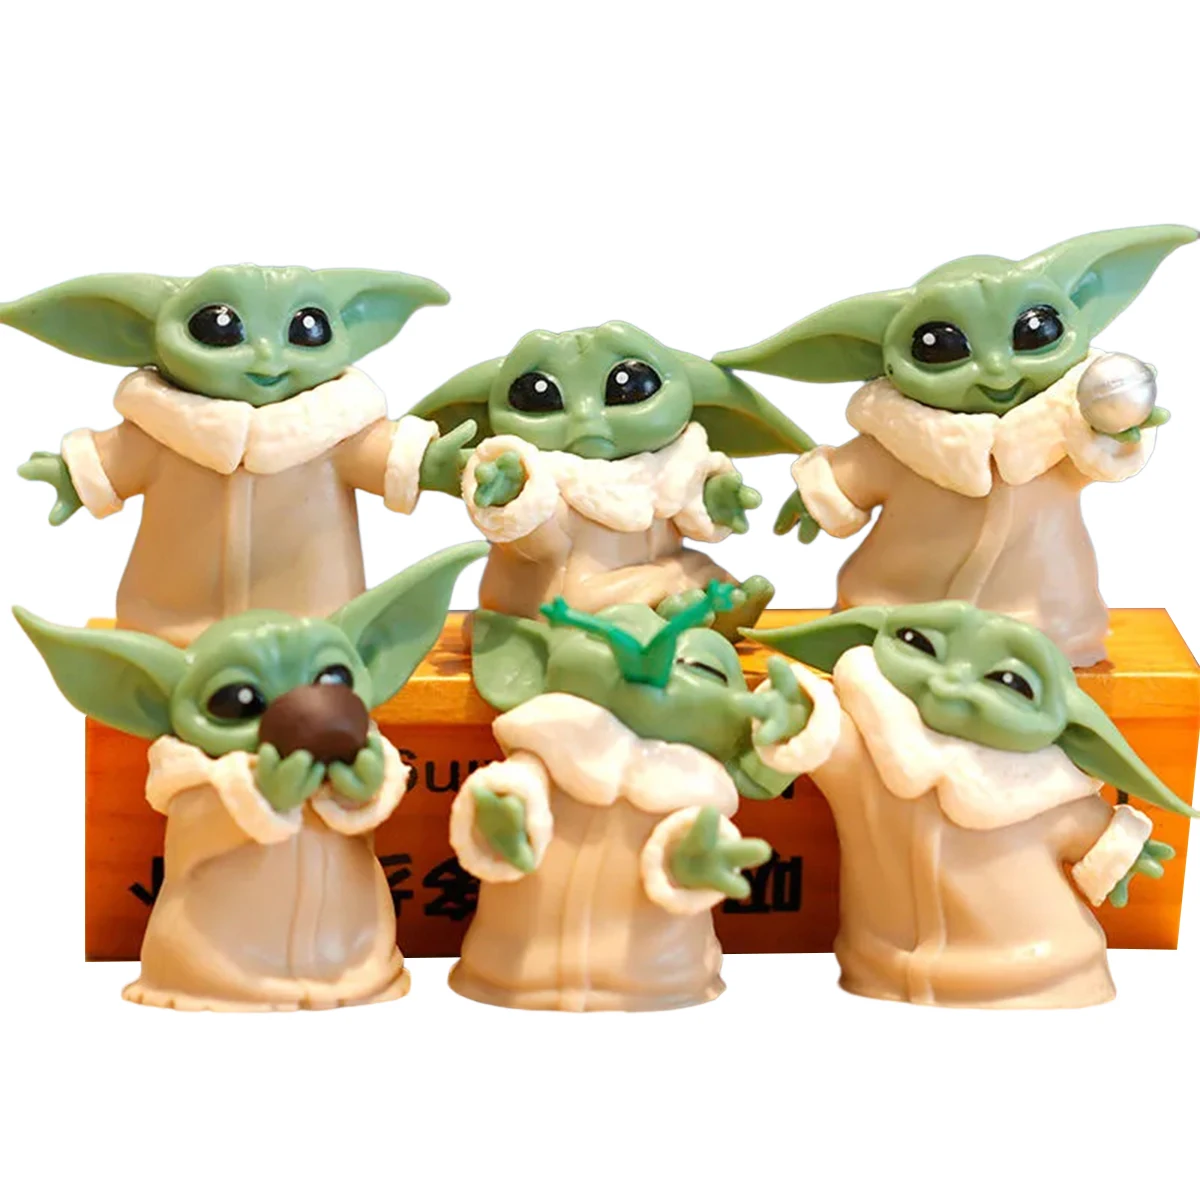 

Star Wars Animation Movies Peripheral Toys Q-Version Dolls Figure Model Grogu Yoda Baby The Mandalorian Desktop Ornaments